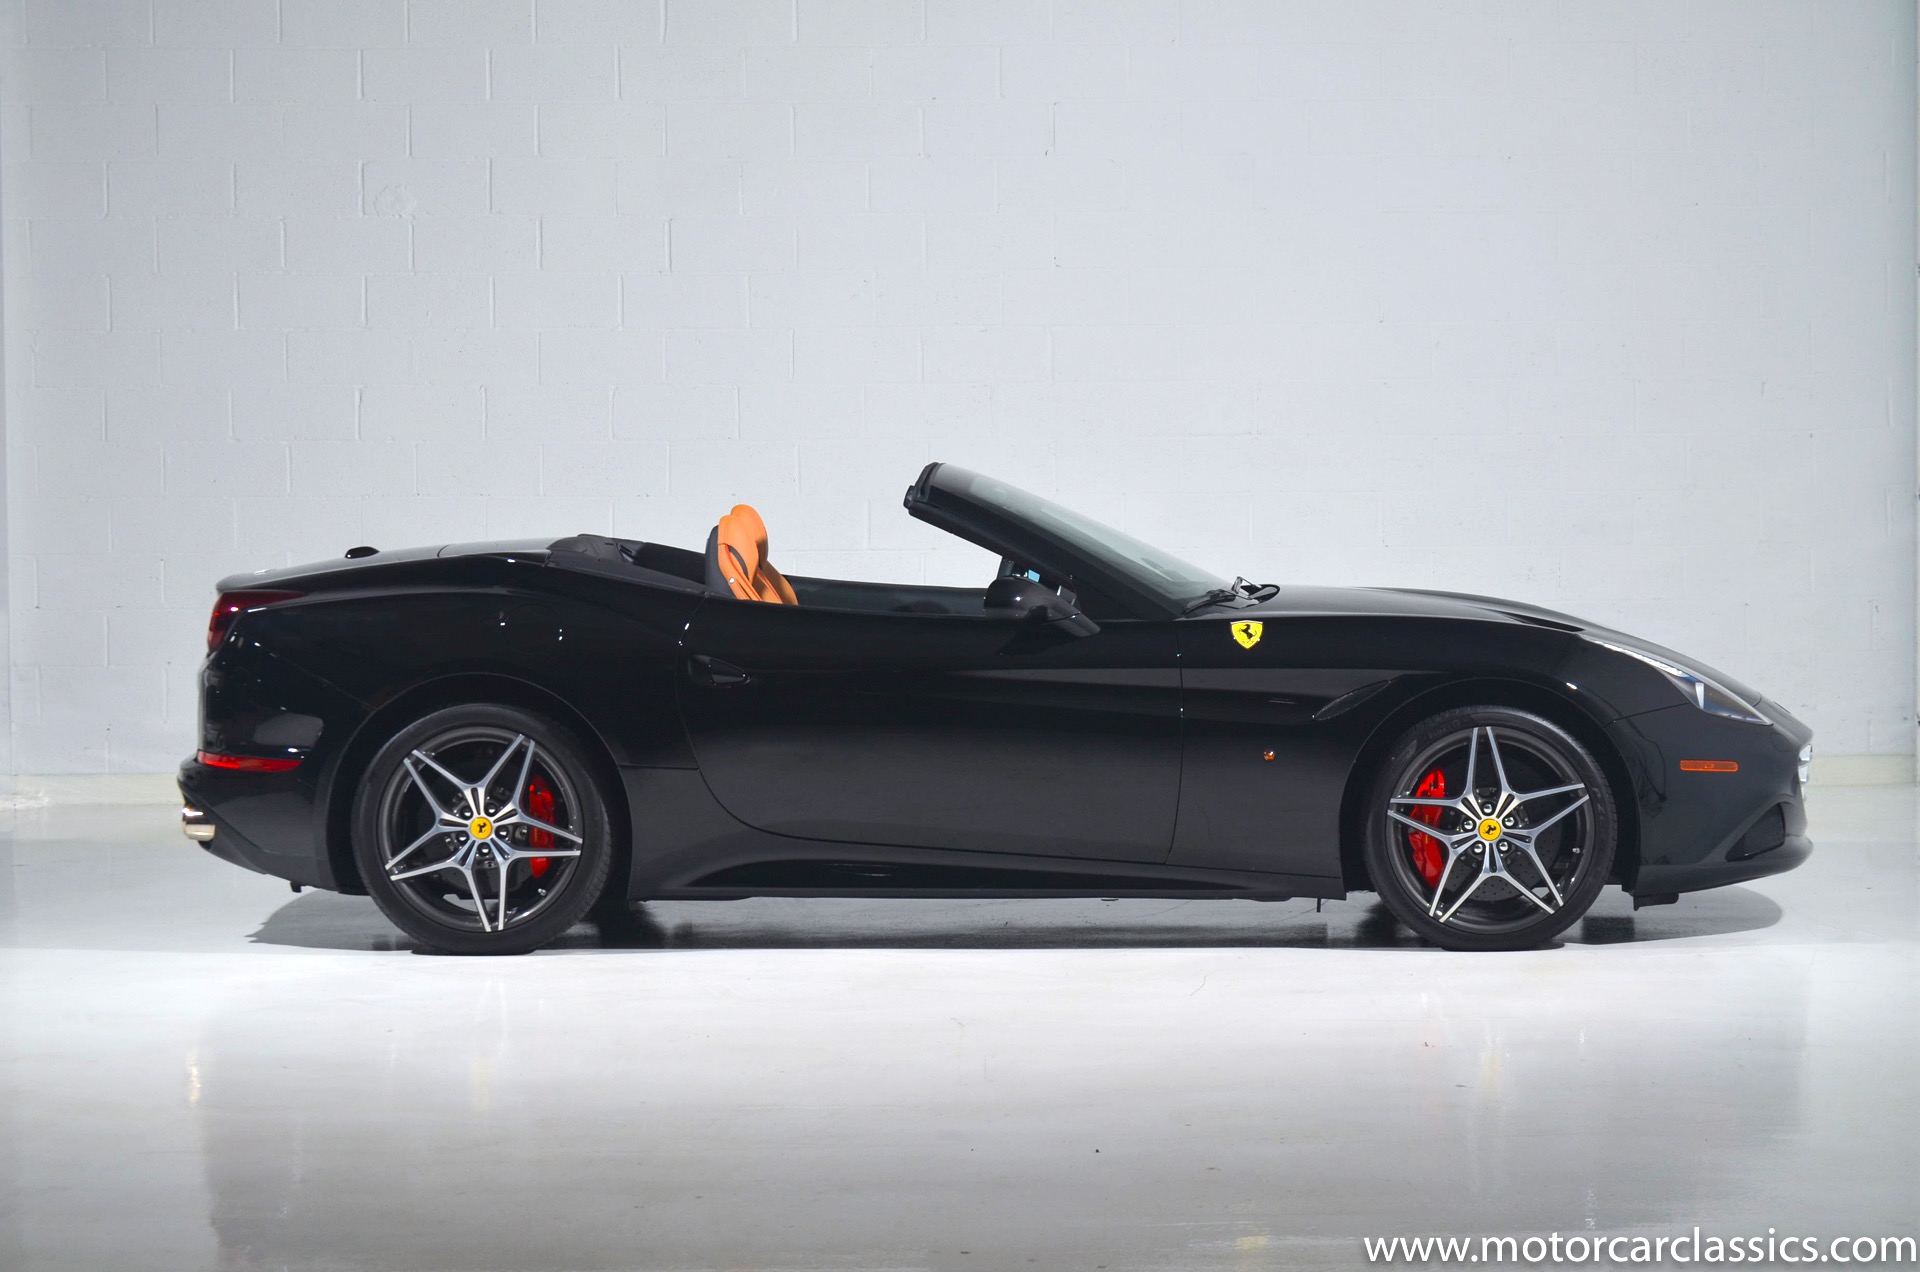 Used 2018 Ferrari California T For Sale ($184,900) | Motorcar Classics Stock #1292